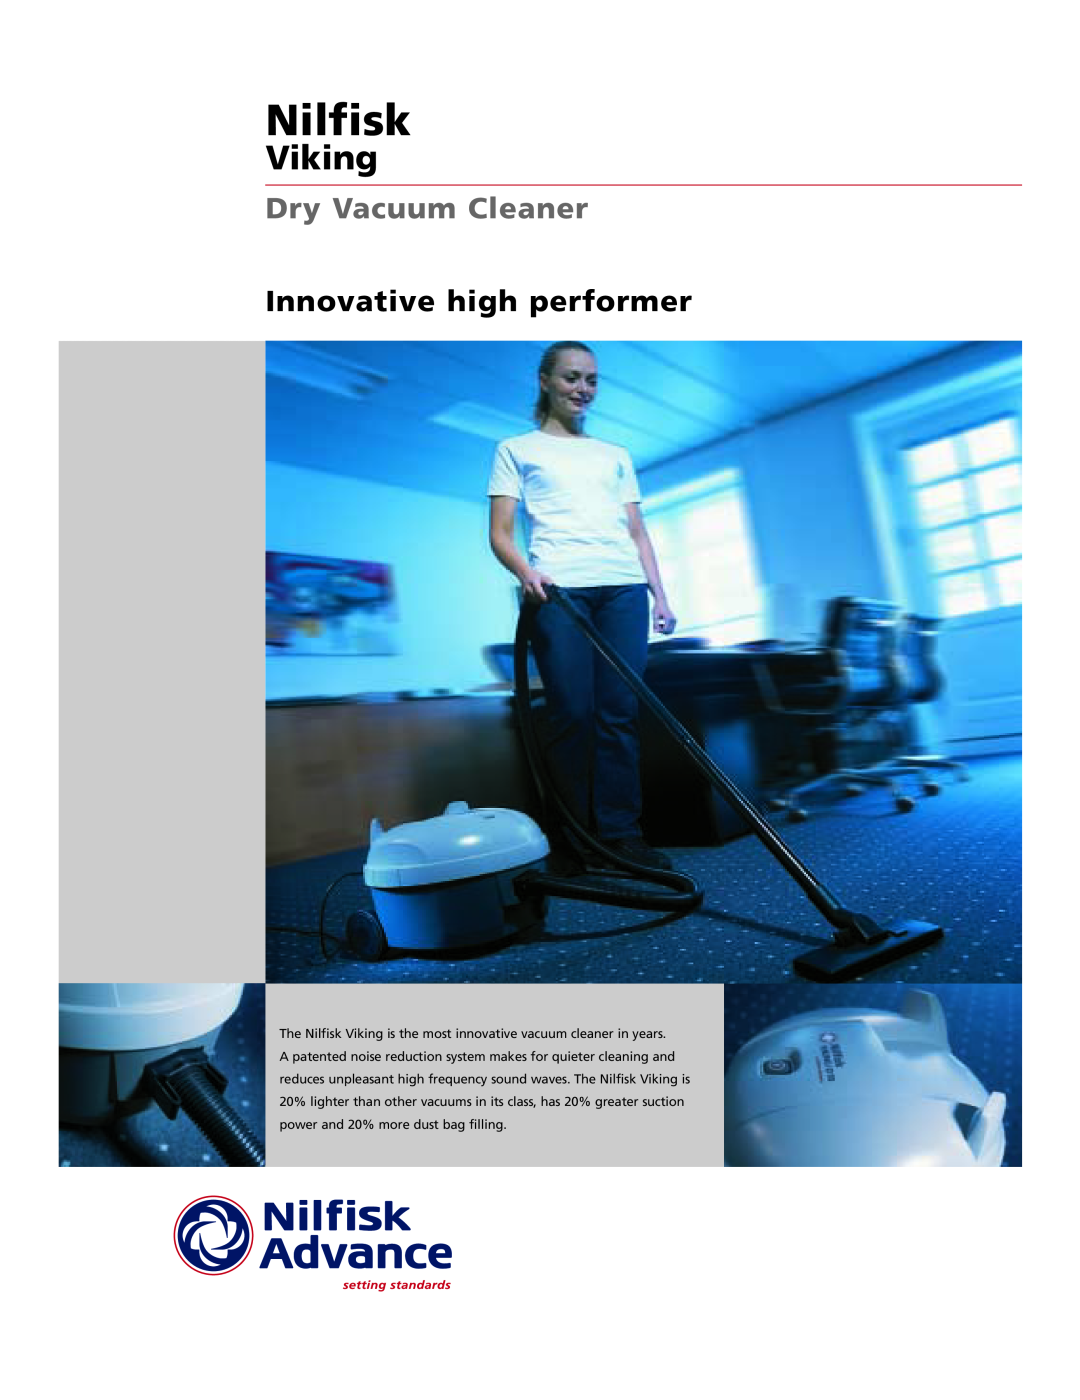 Nilfisk-Advance America Dry Vacuum Cleaner manual Nilfisk, Viking, Innovative high performer 